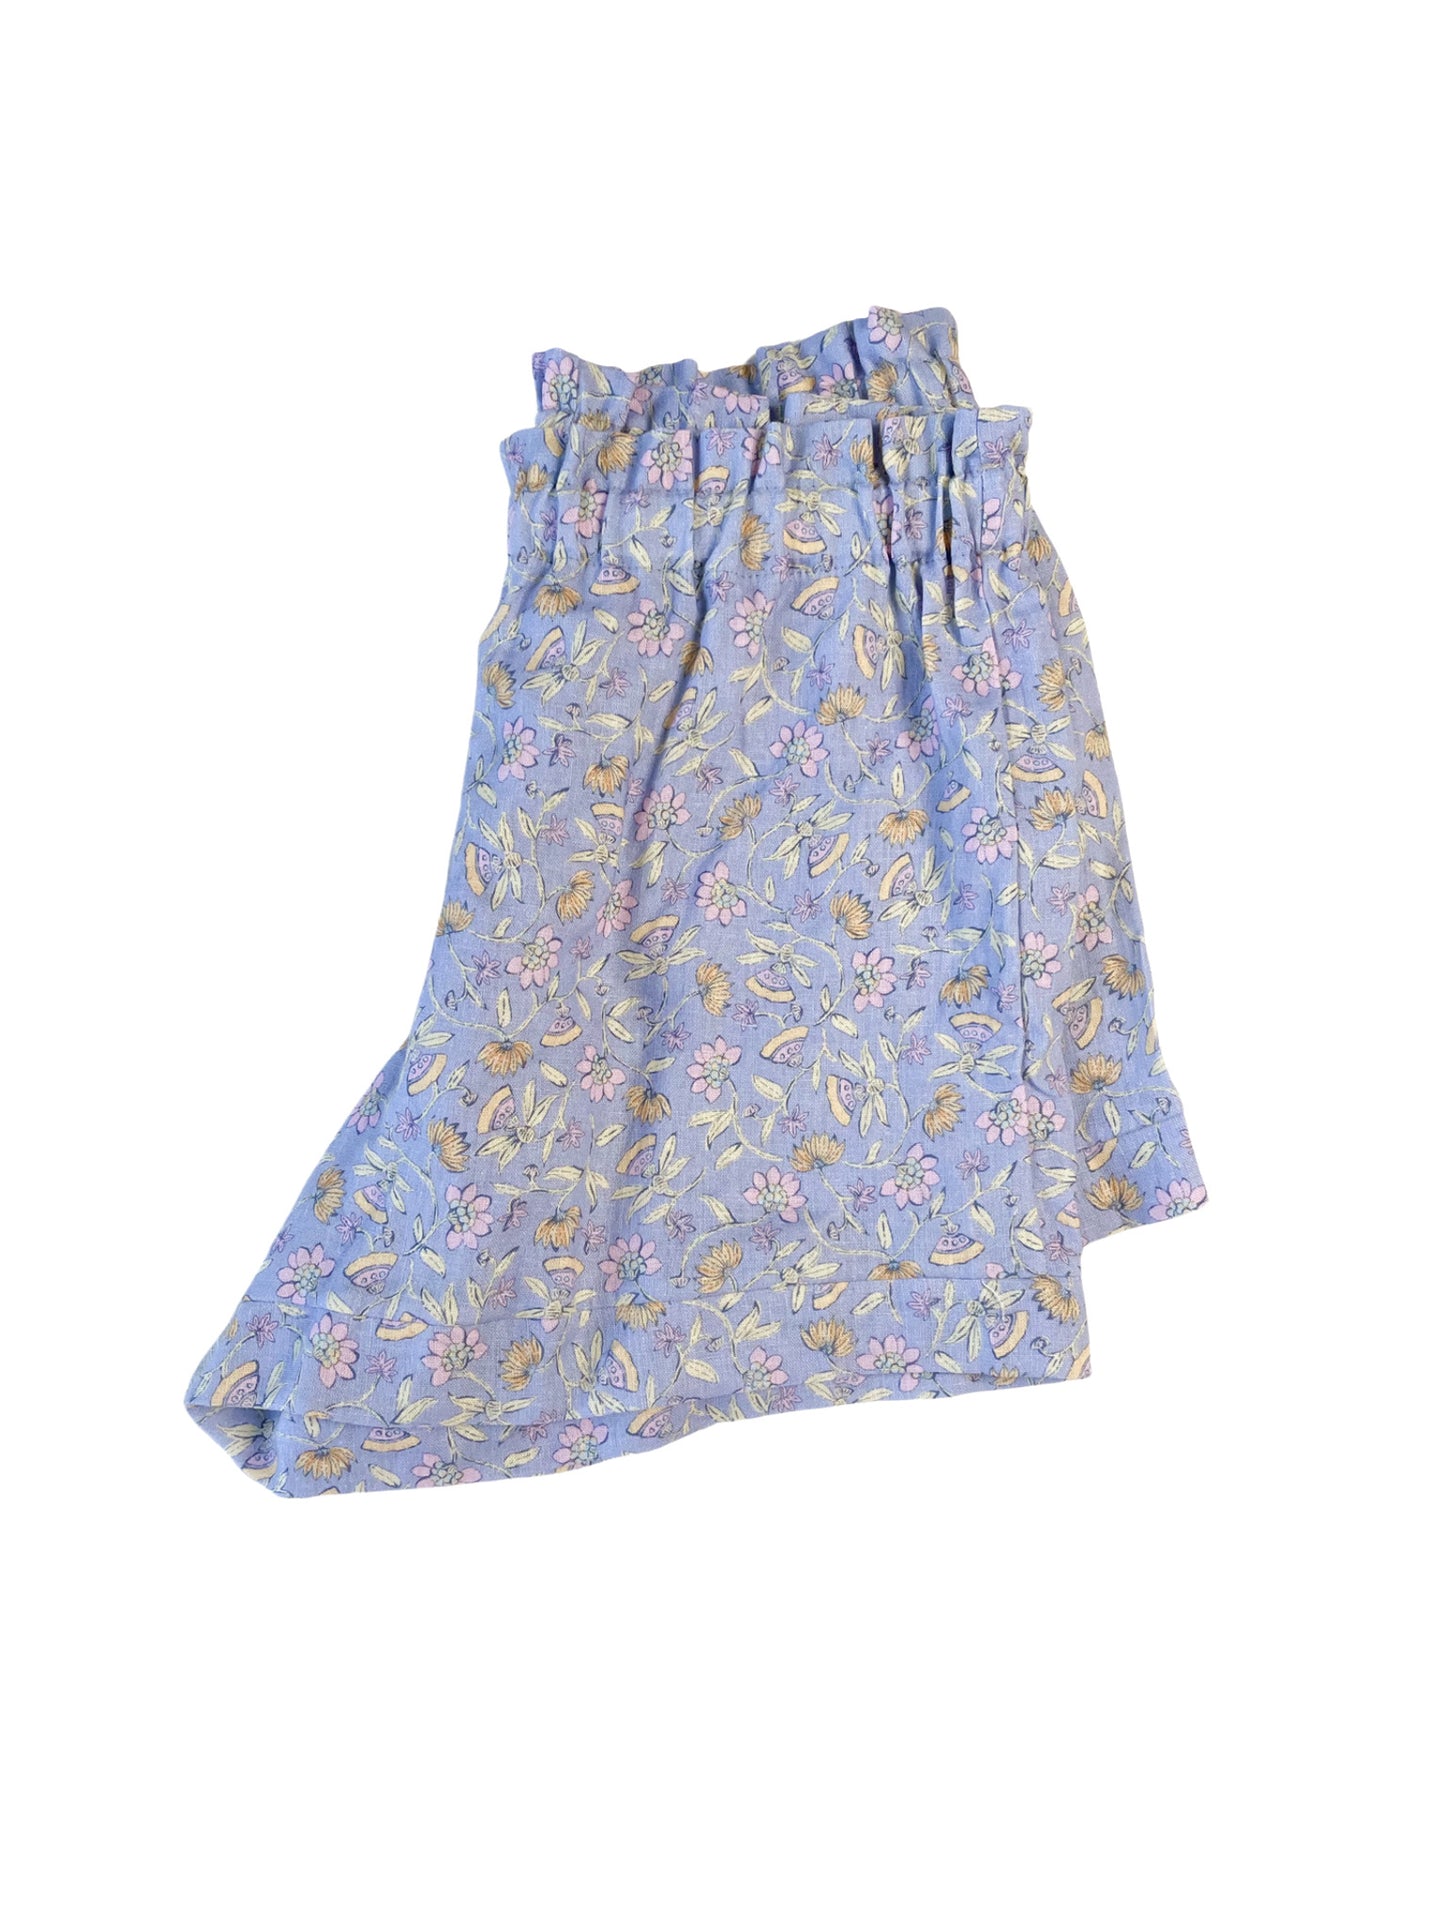 Linen ruffle shorts / floral blue